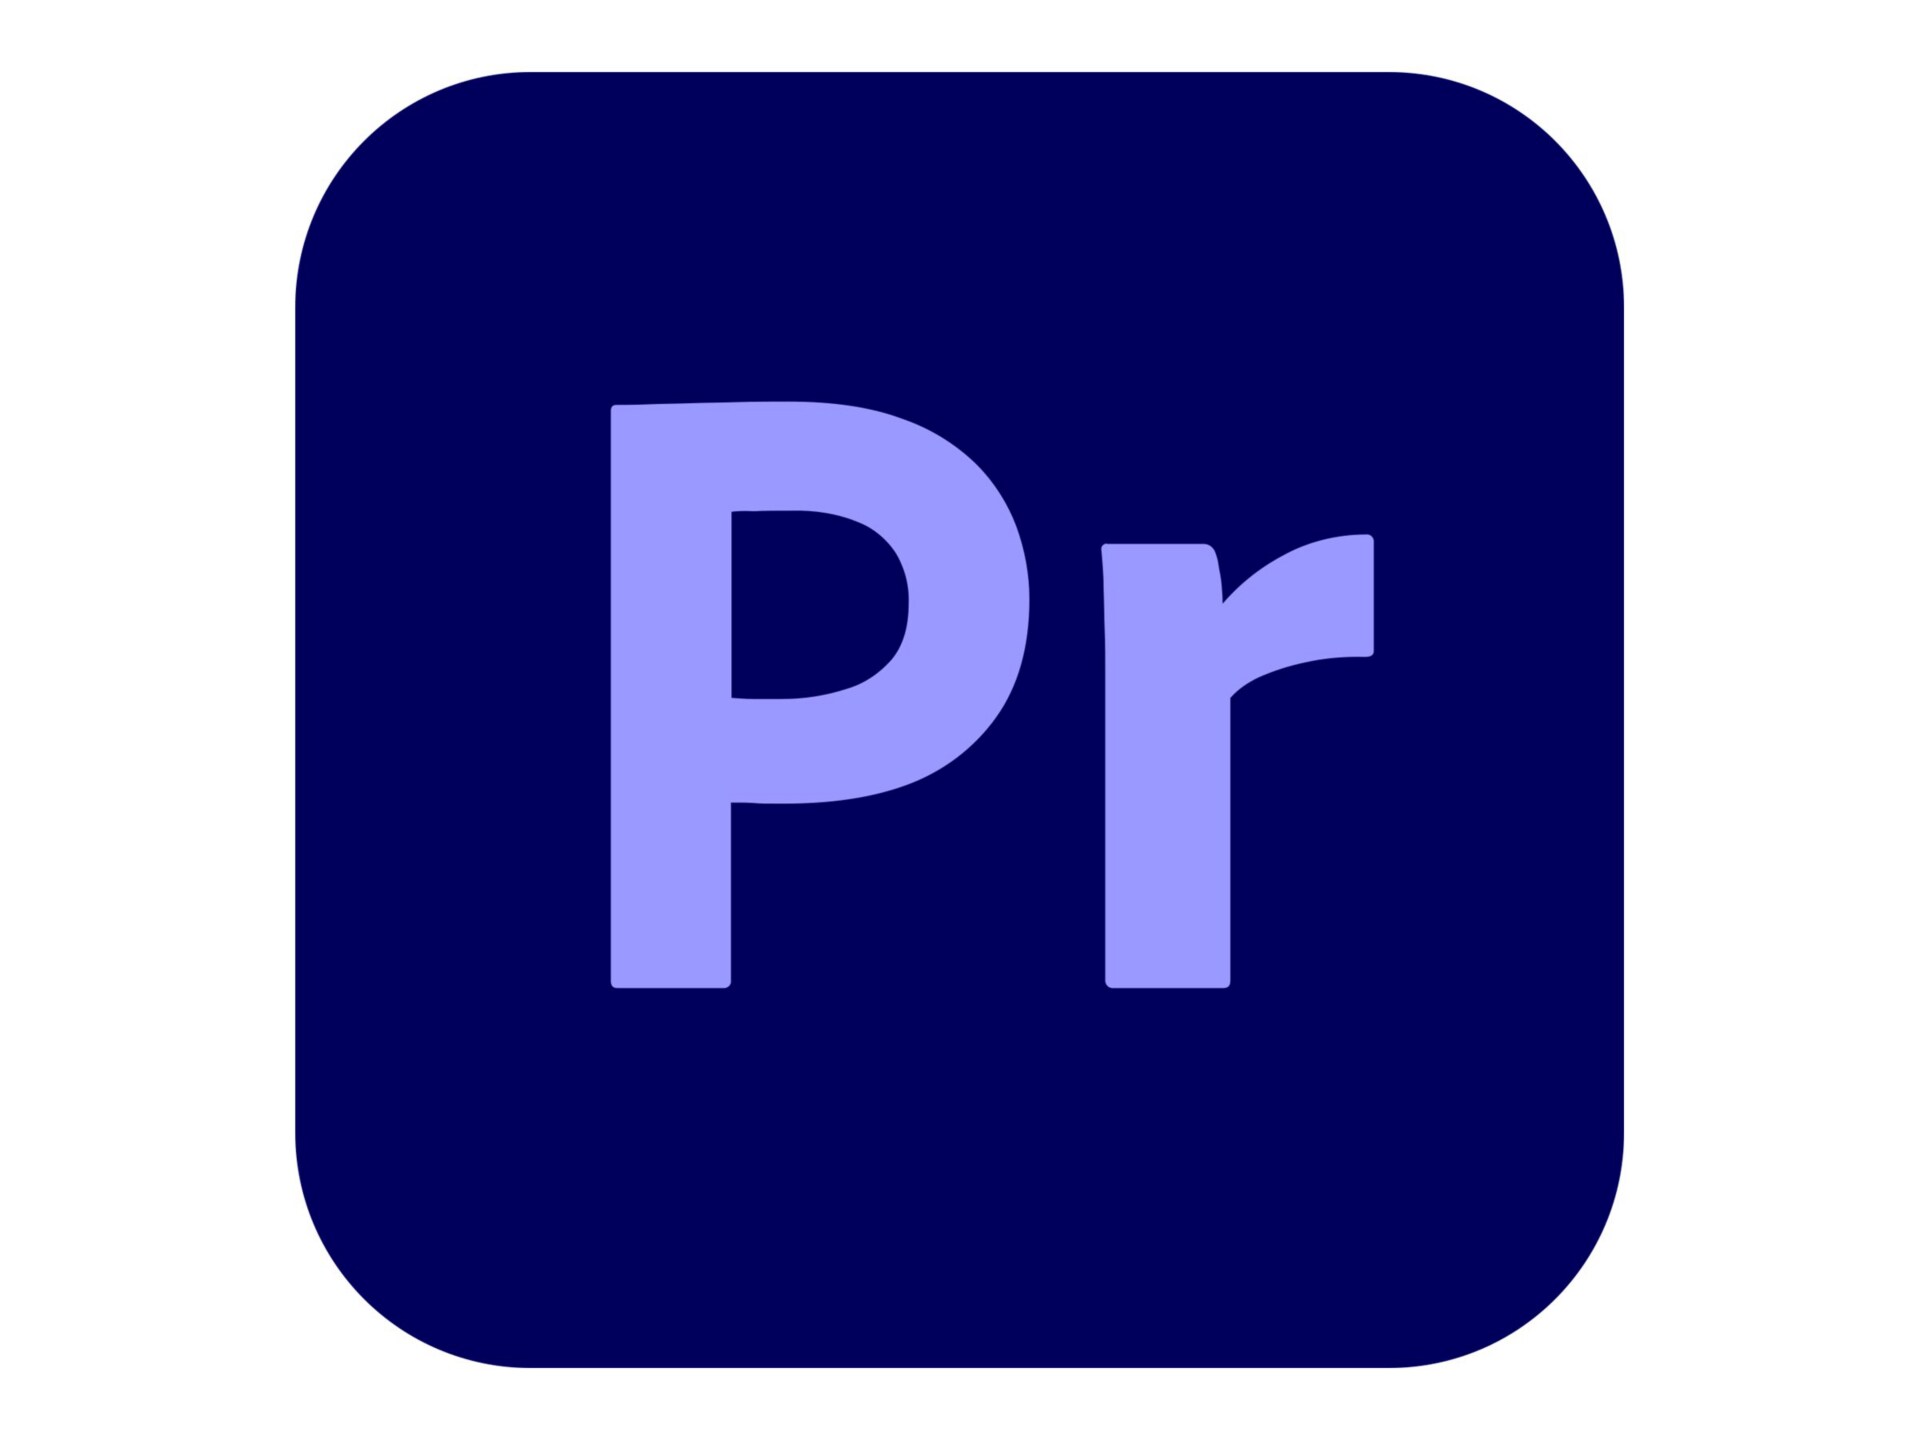 Adobe Premiere Pro CC for Enterprise - Subscription New (6 months) - 1 name